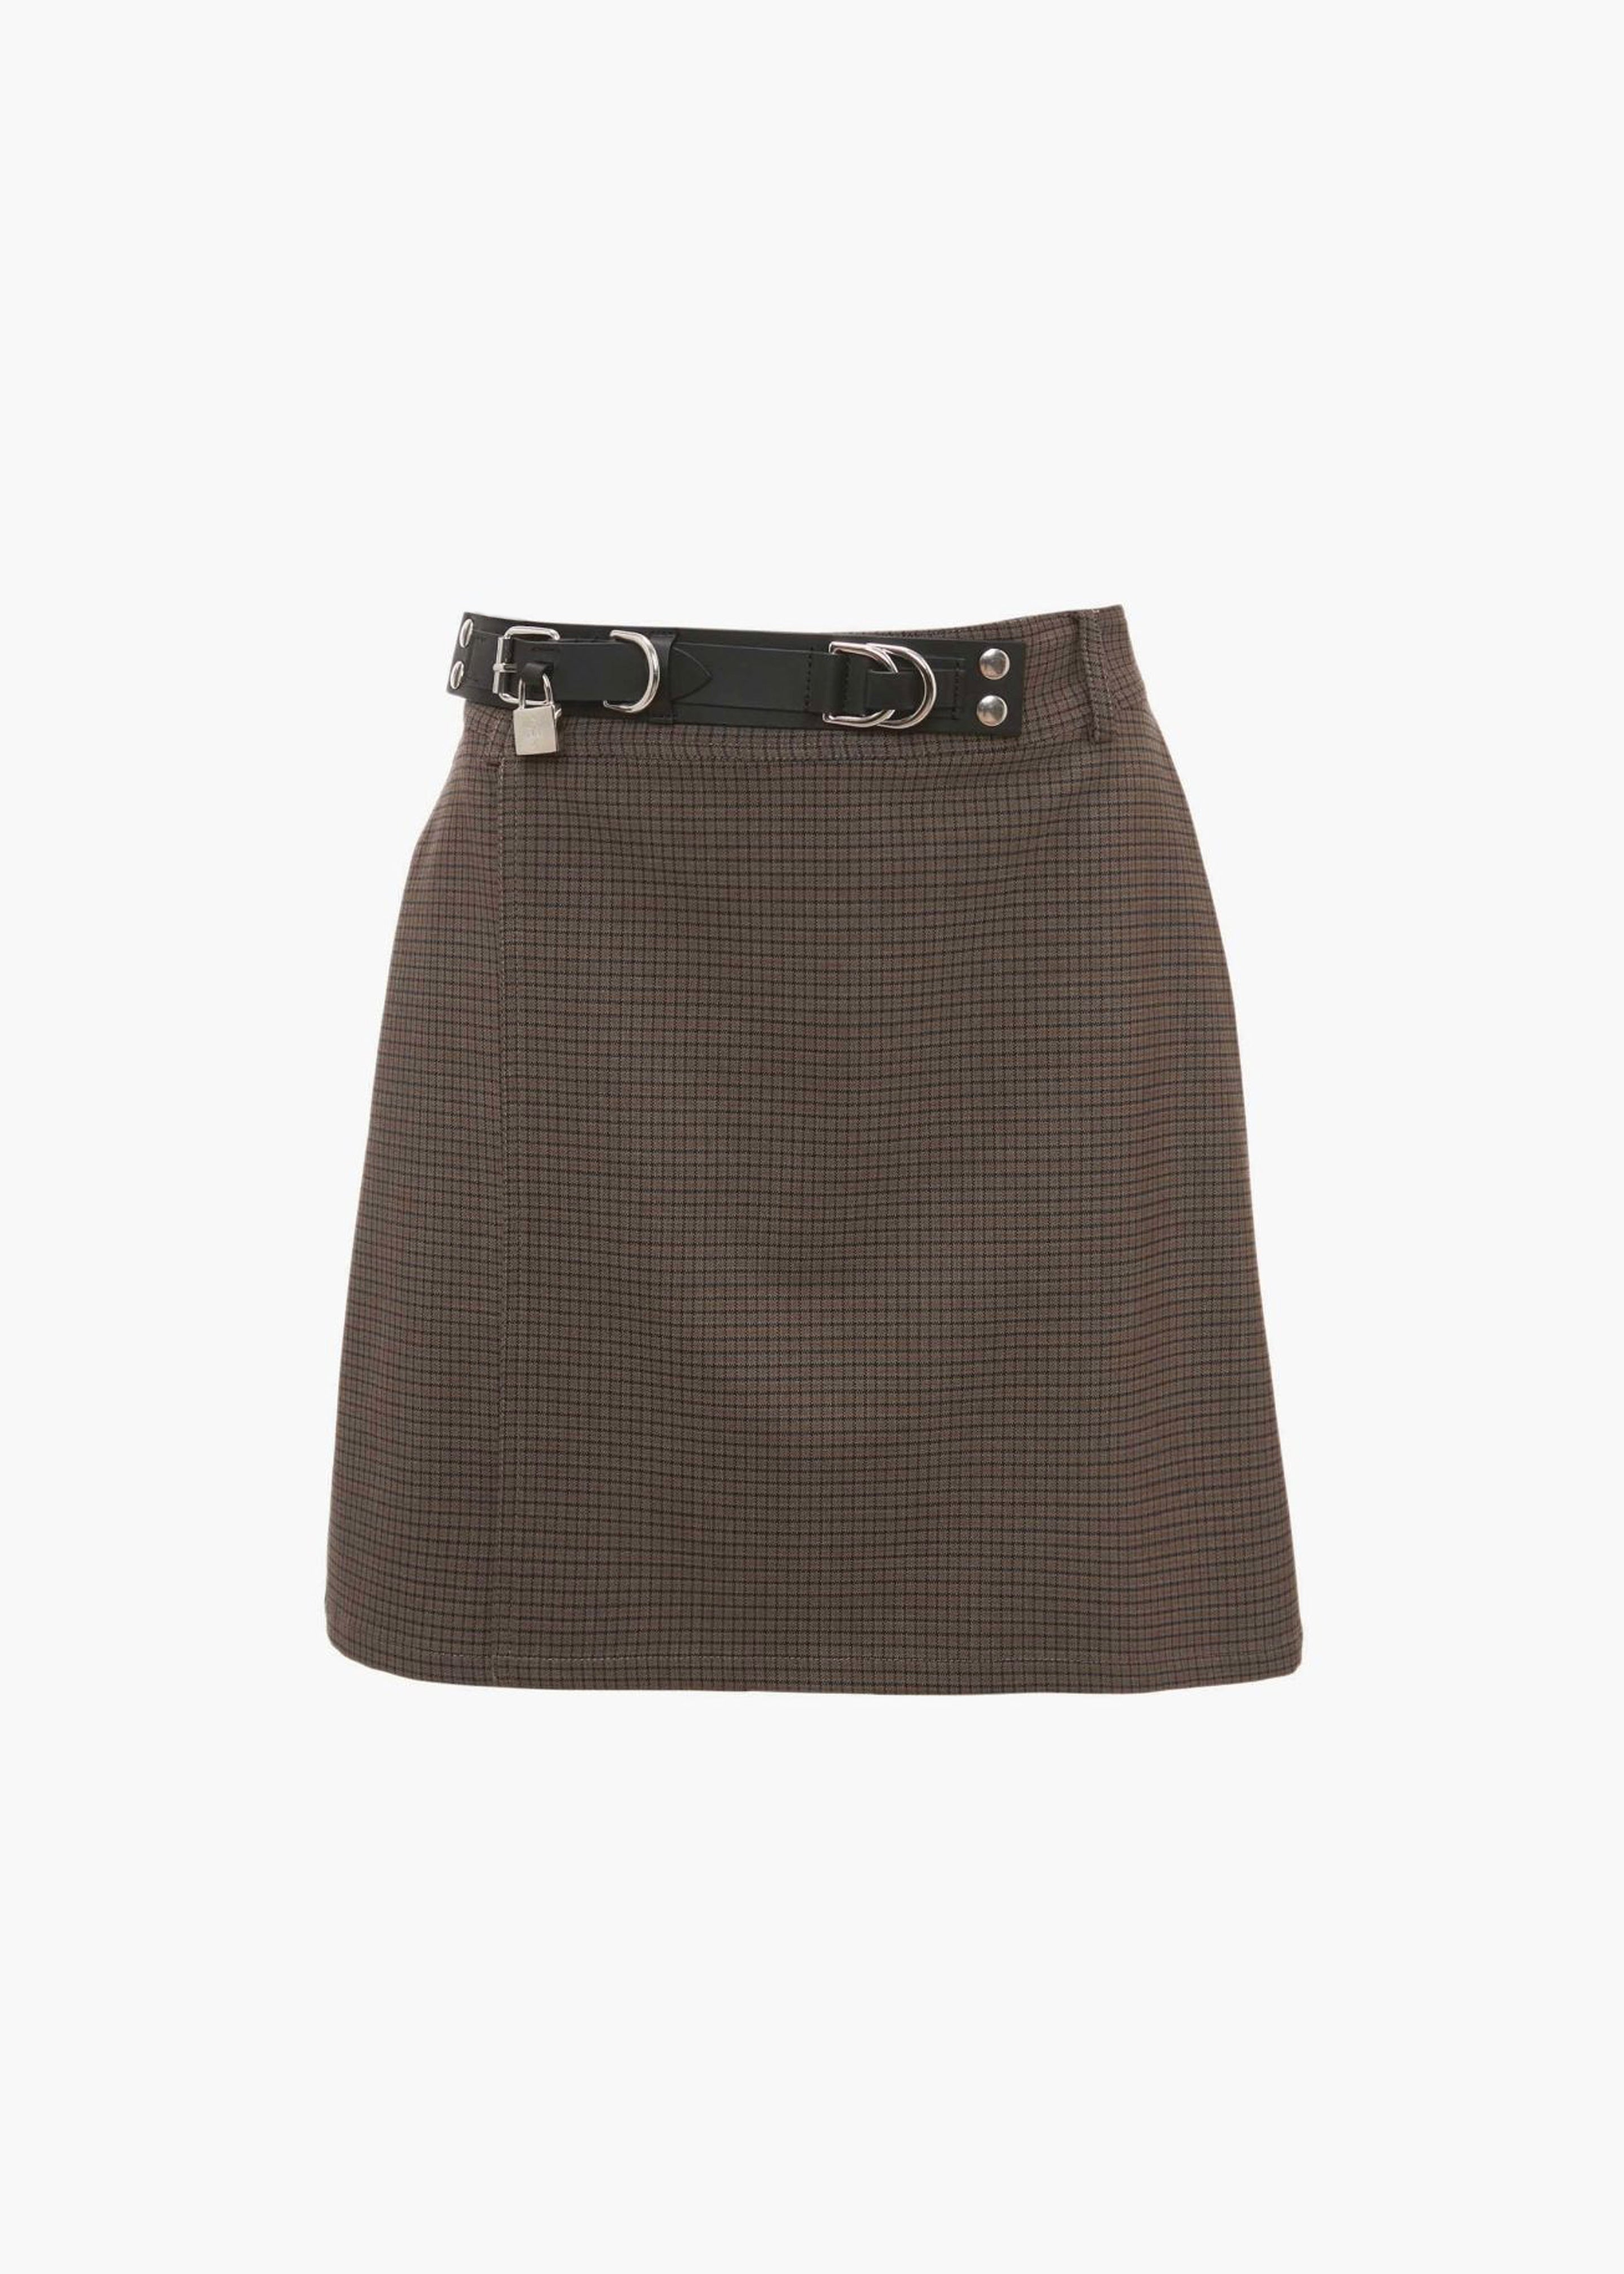 JW Anderson Padlock Strap Mini Skirt - Brown Sugar Comb - 7